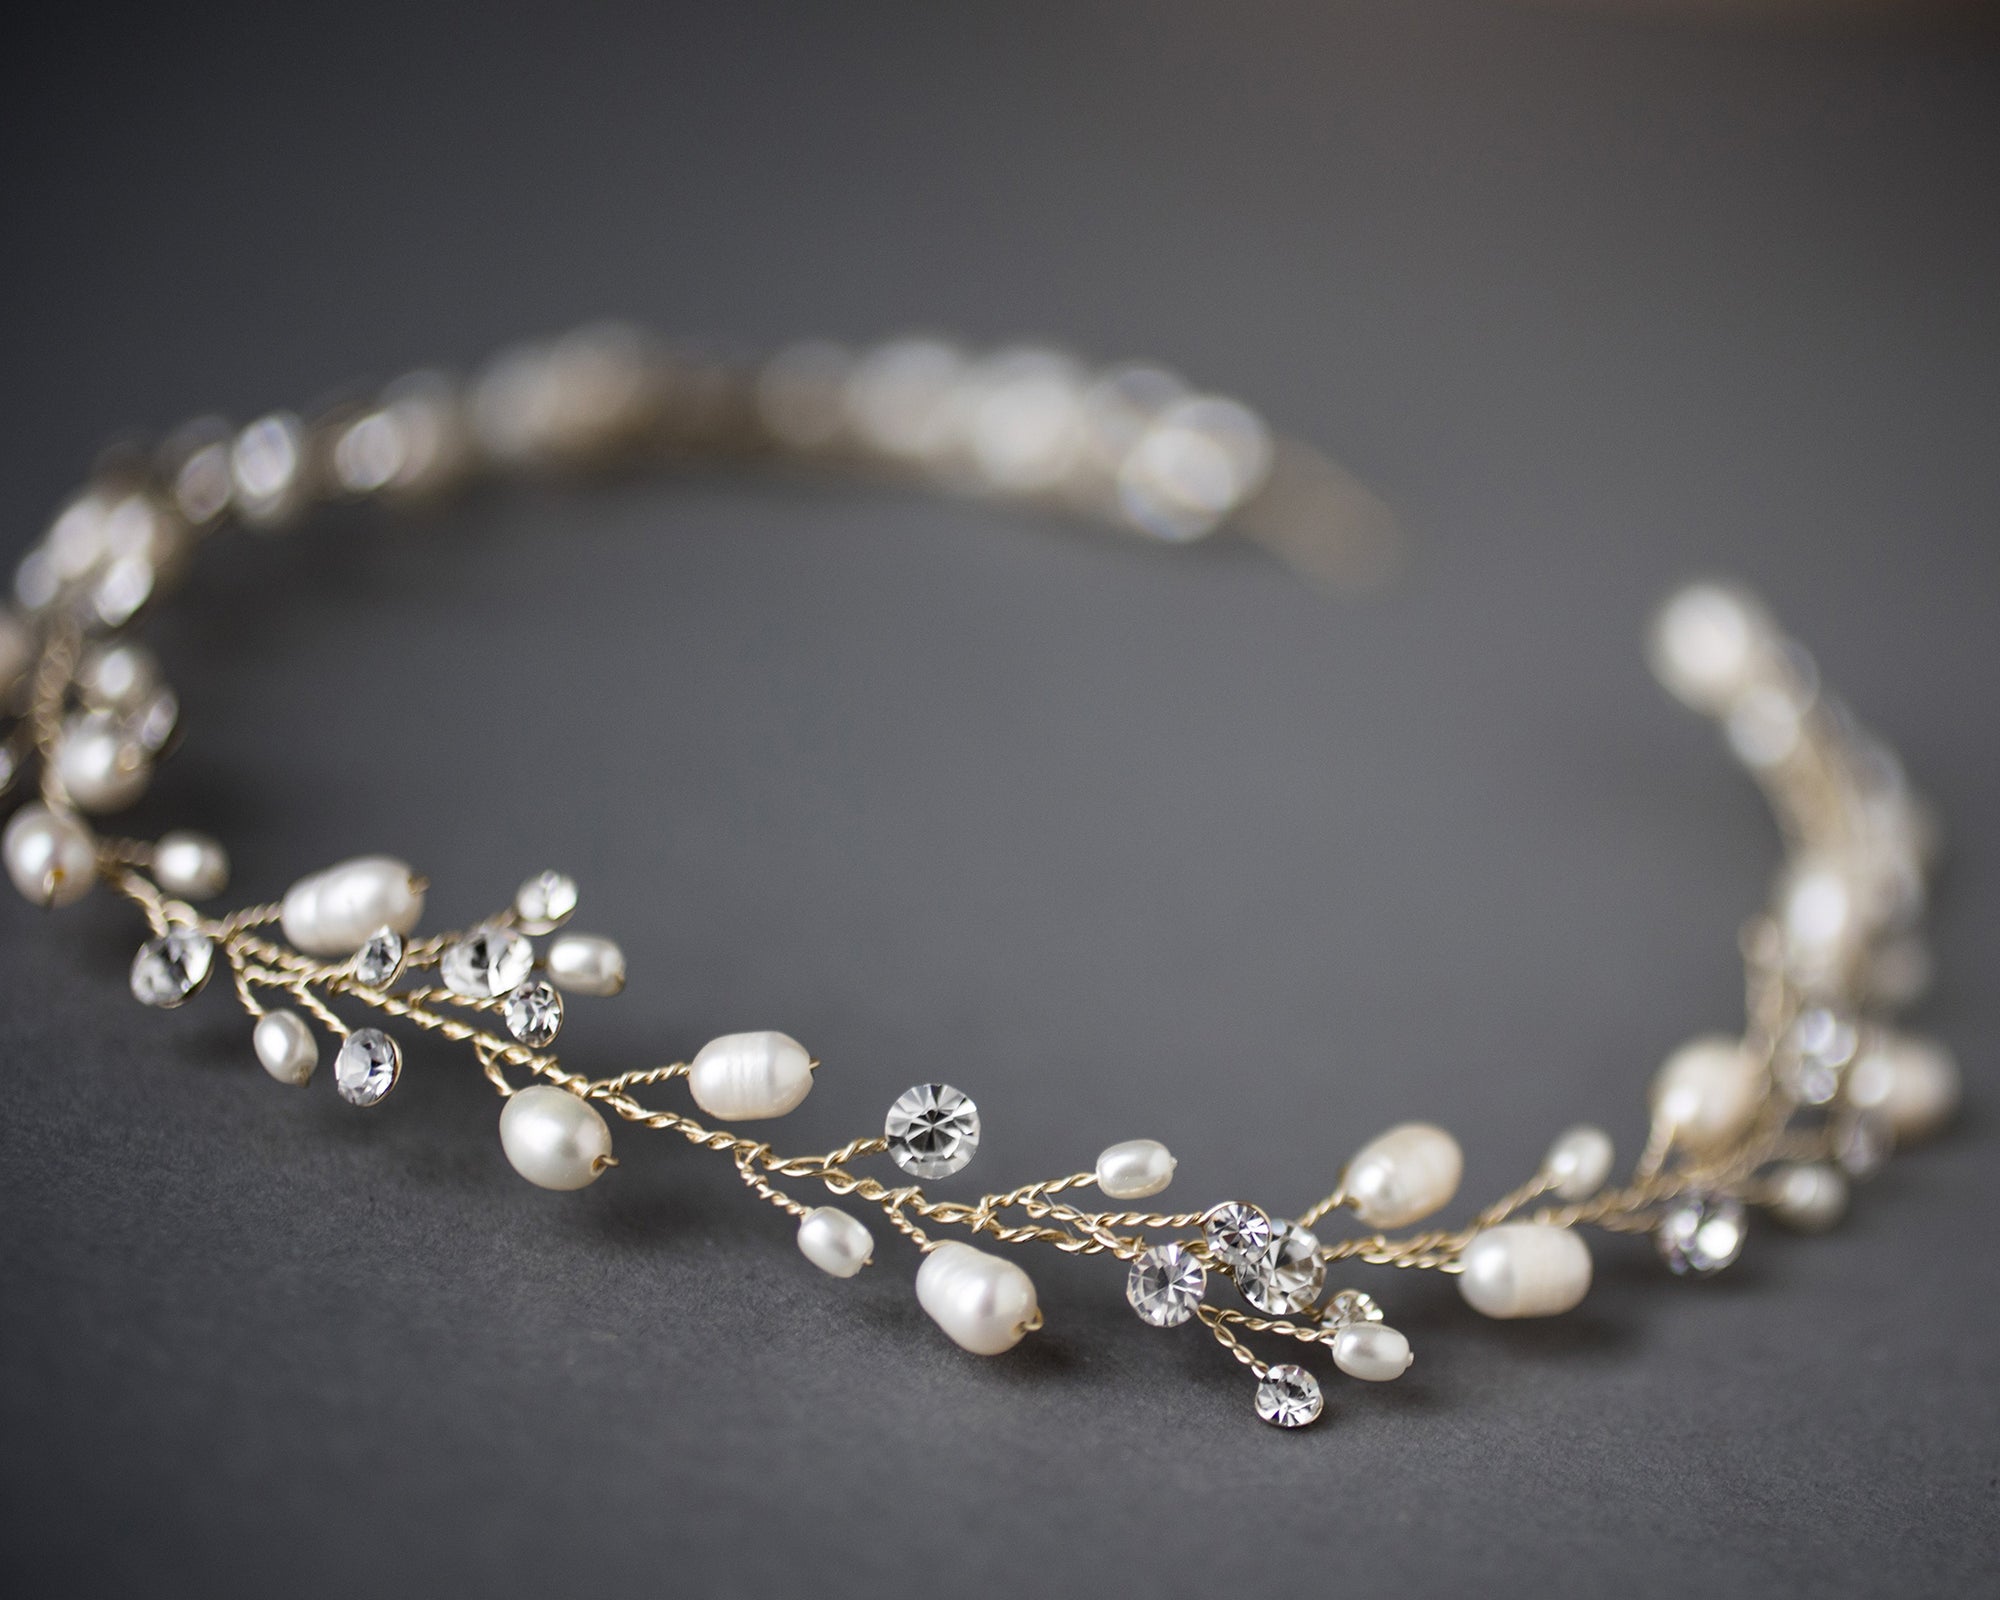 Wedding Hair Vine Headband of Freshwater Pearls and Rhinestones - Cassandra Lynne